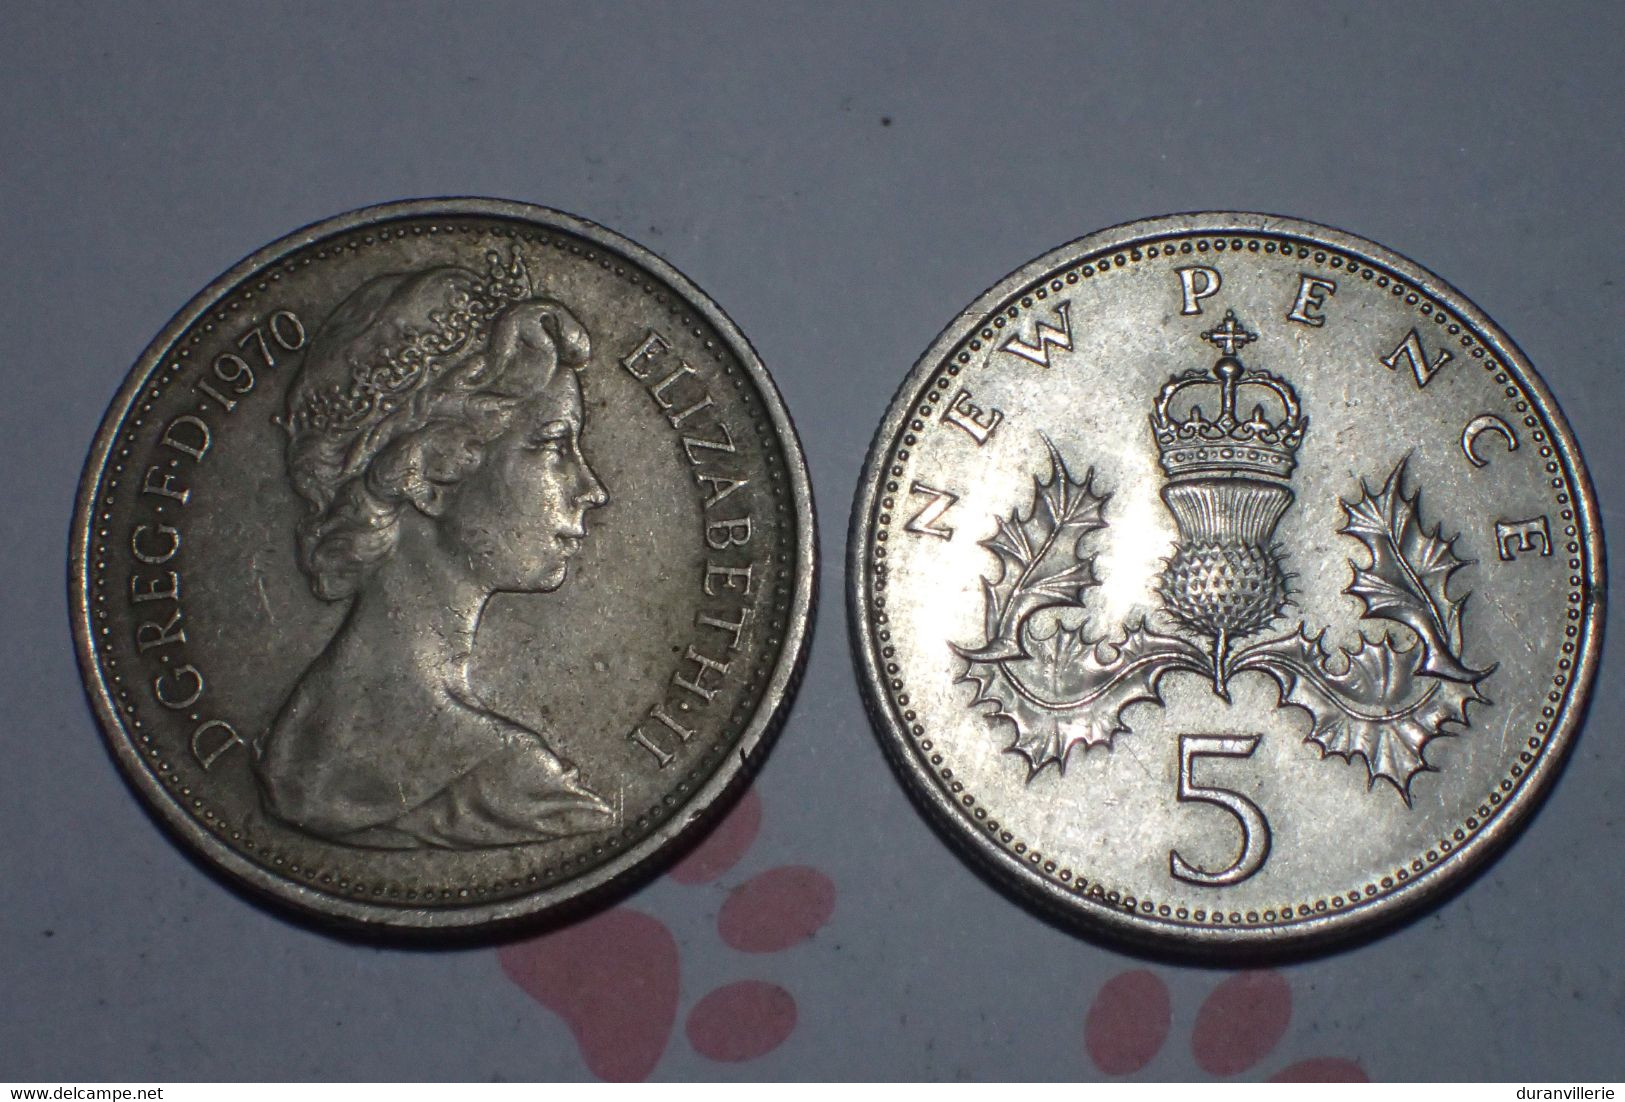 Grande Bretagne Great Britain 5 New Pence 1970 KM 911 - 5 Pence & 5 New Pence